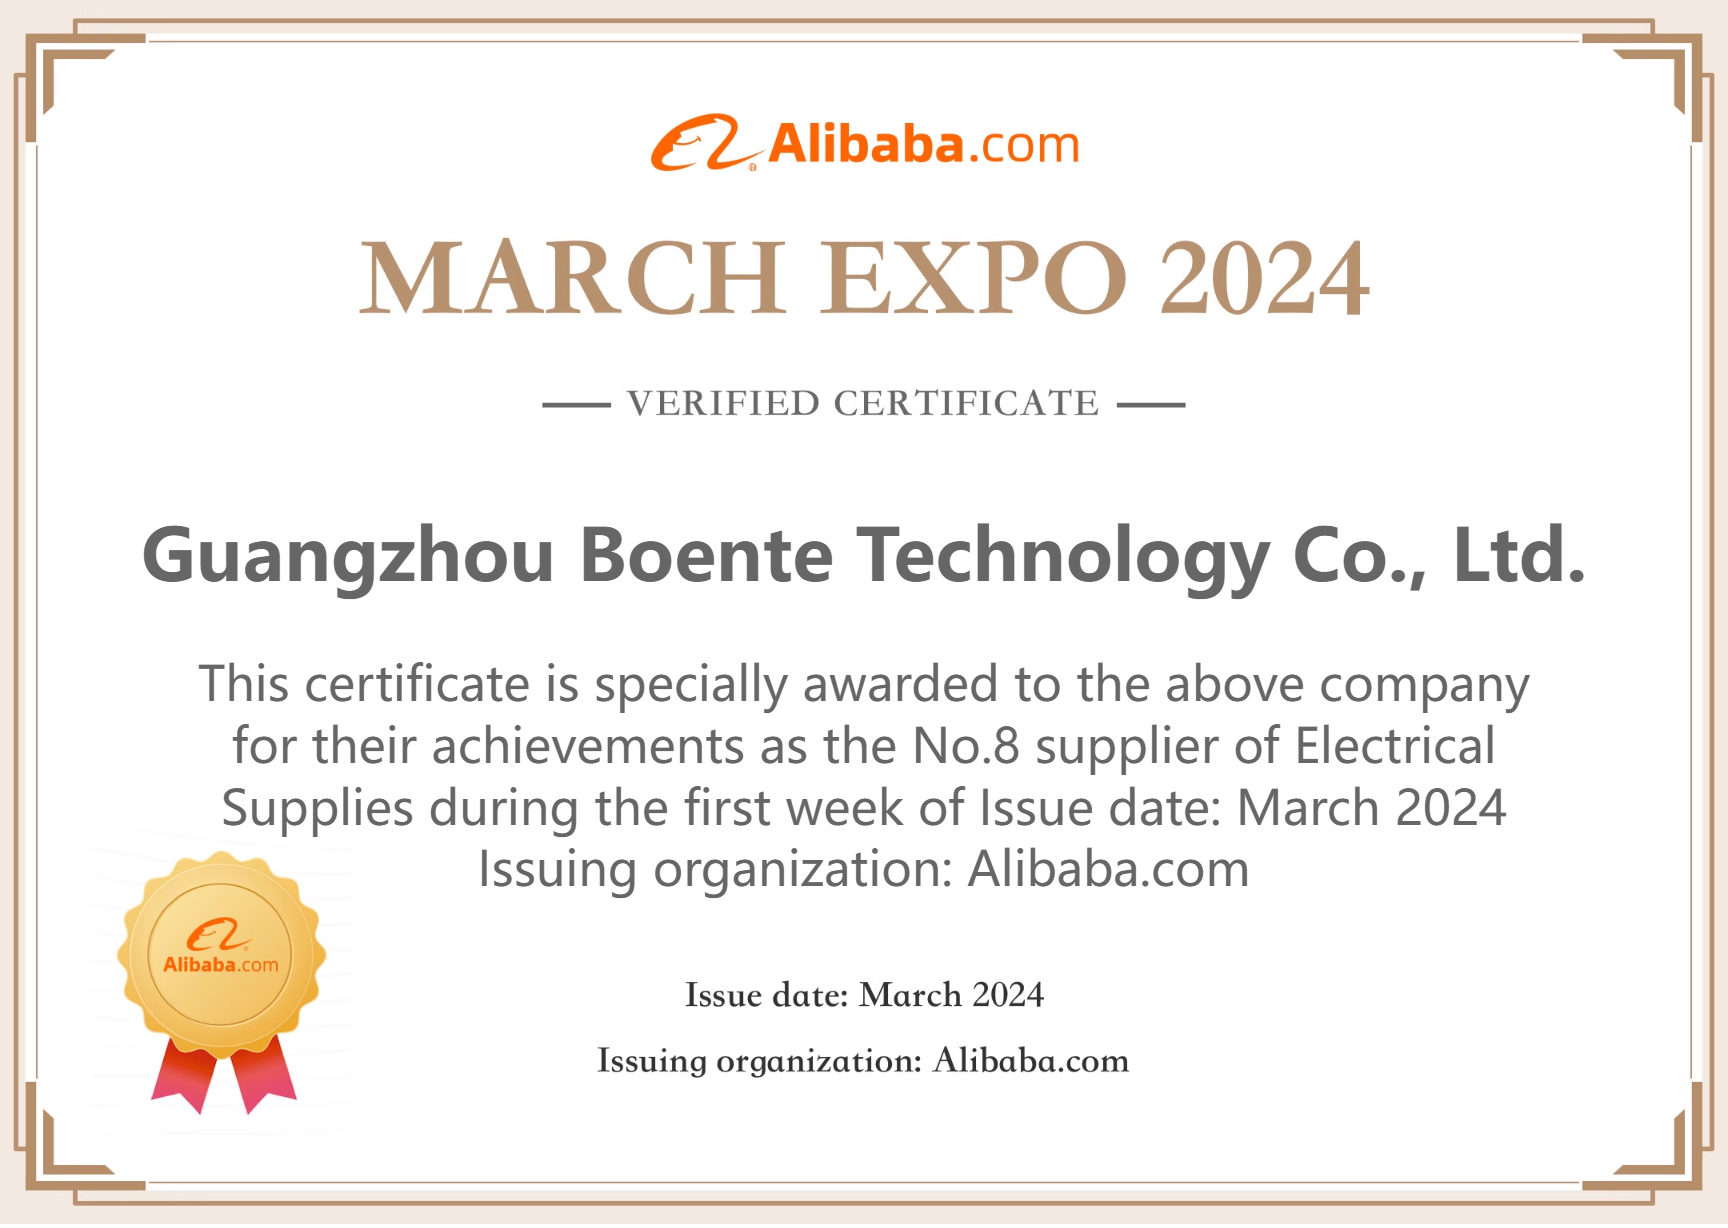 Alibaba certificate.png